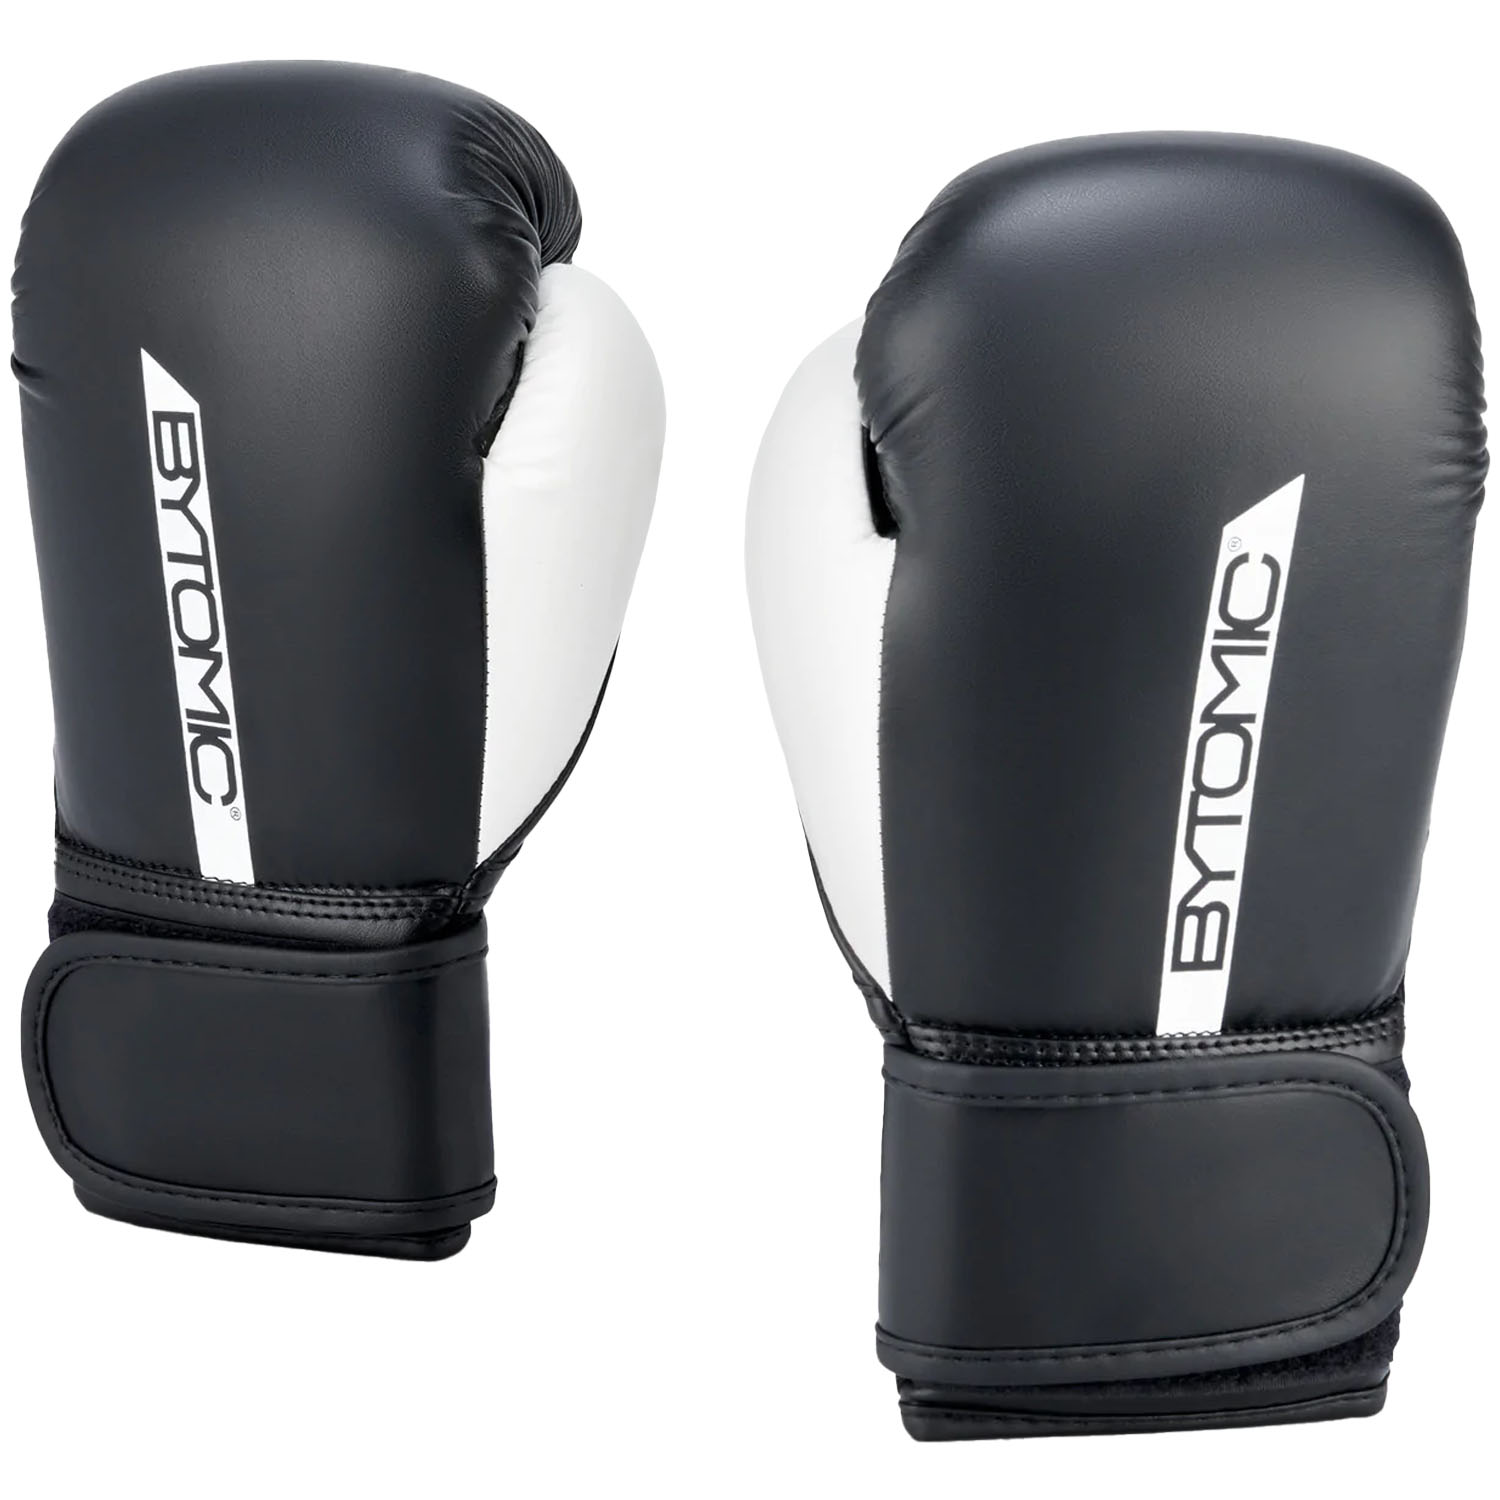 Bytomic Boxing Gloves, red Label, black-white, 14 Oz